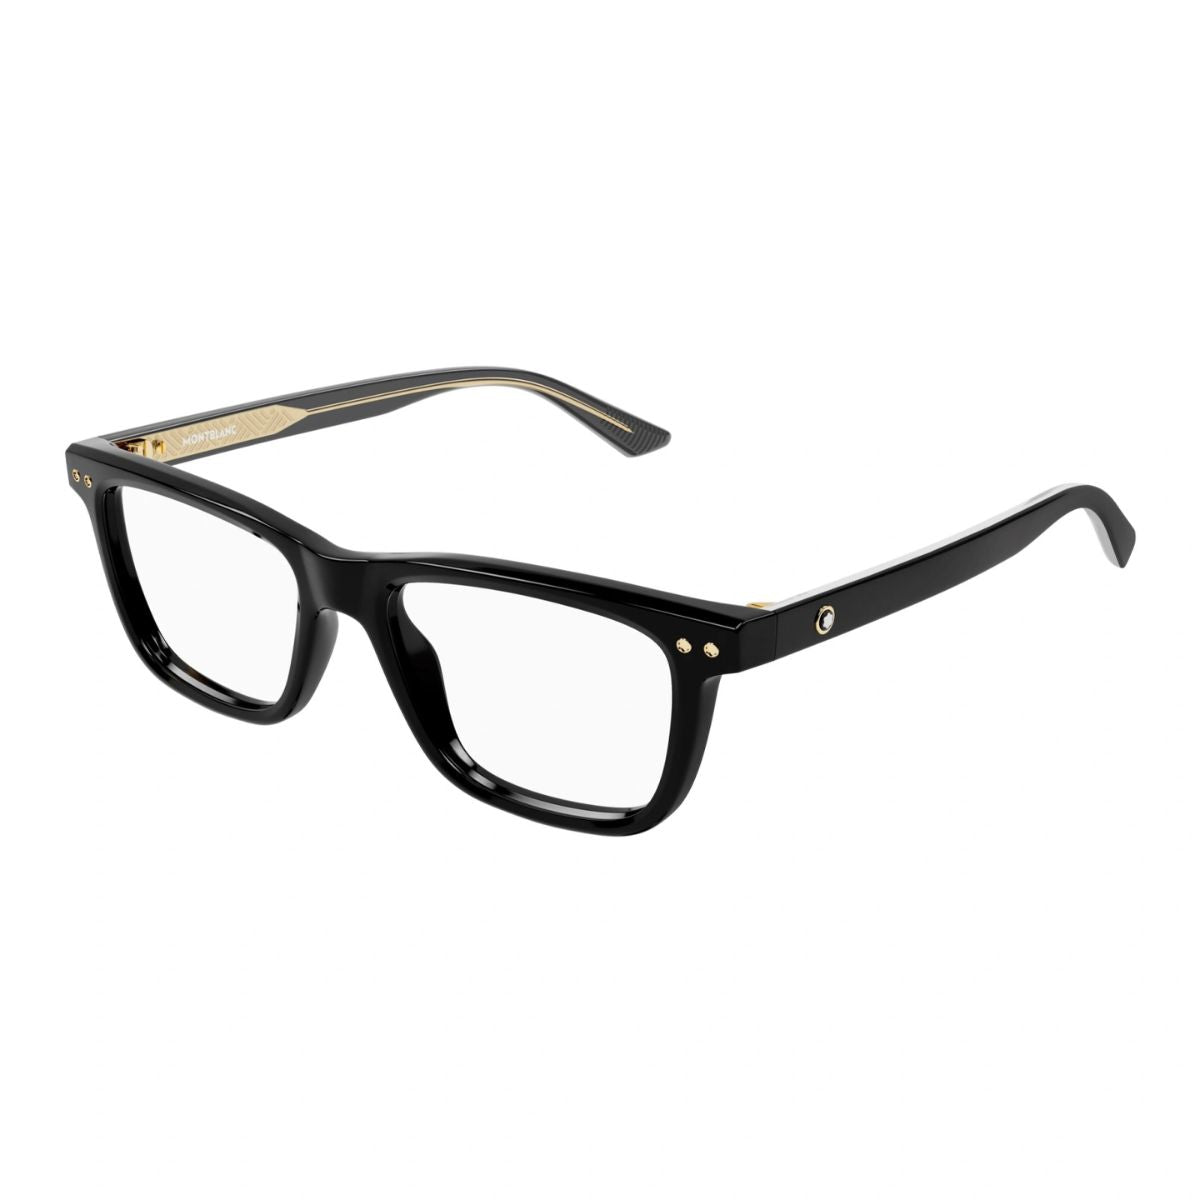 Mont Blac MB0322O frame for mens displayed on Optorium's online shop, showcasing stylish eyewear choices